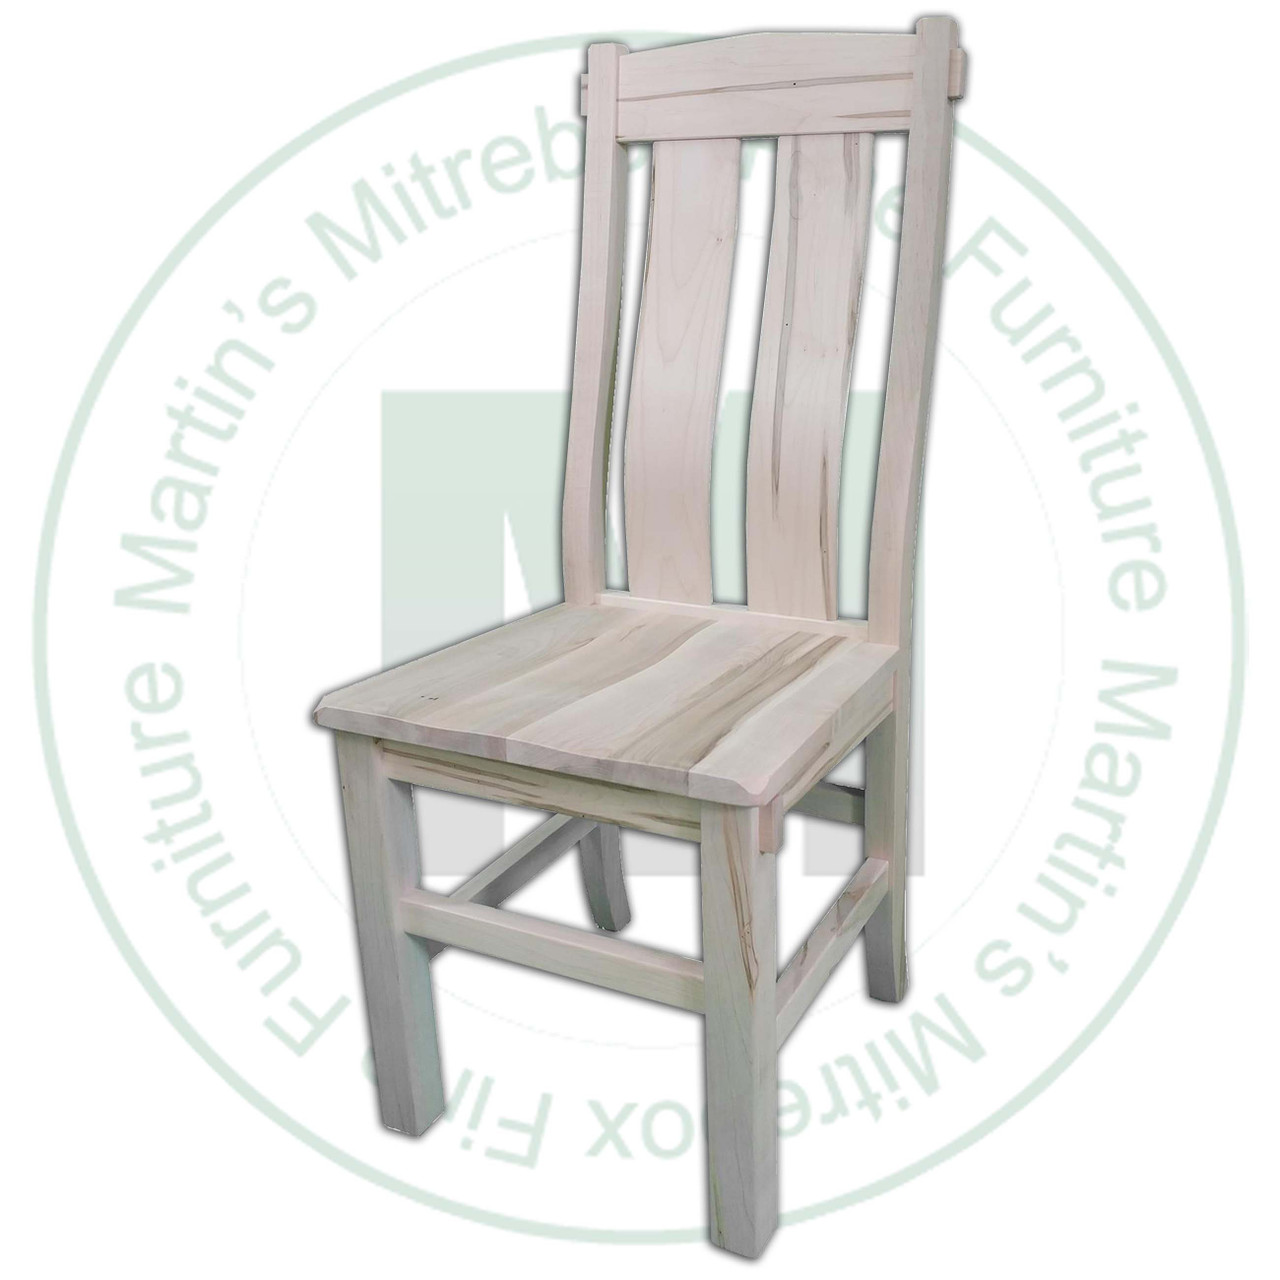 Oak Clifford Side Chair Has Wood Seat